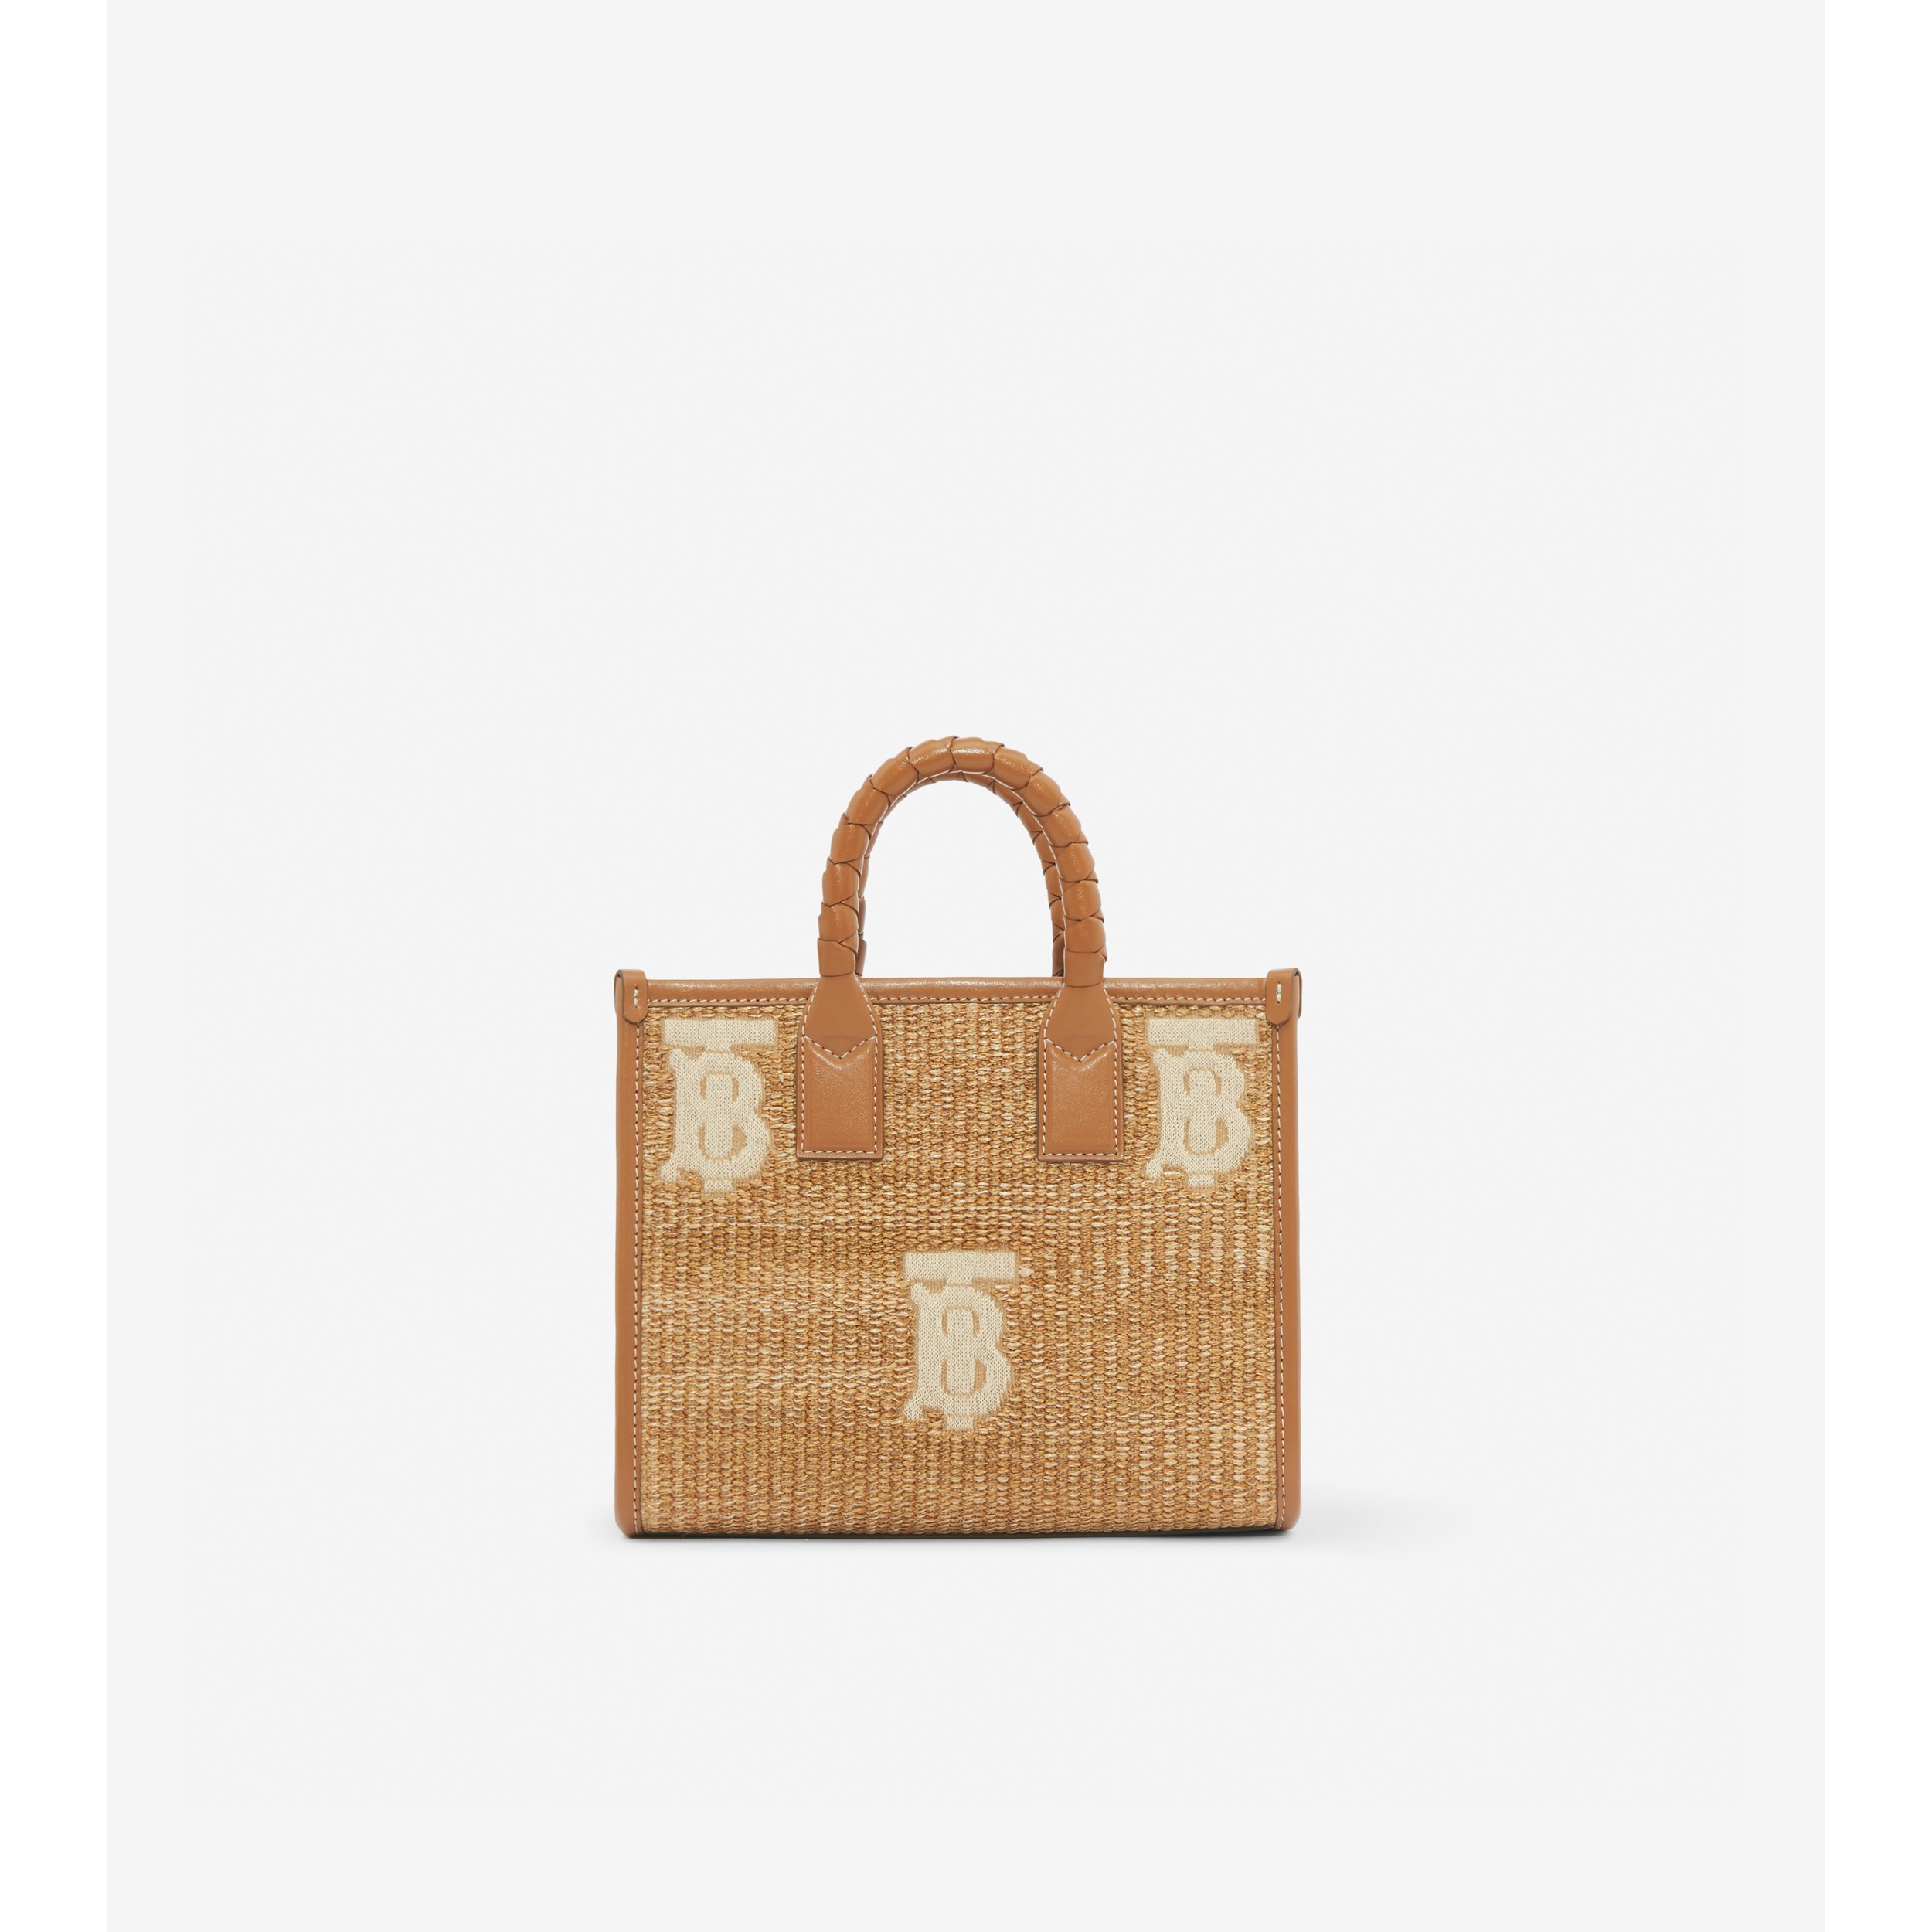 Louis Vuitton, Bags, Christian Louis Vuitton Small Straw Tote